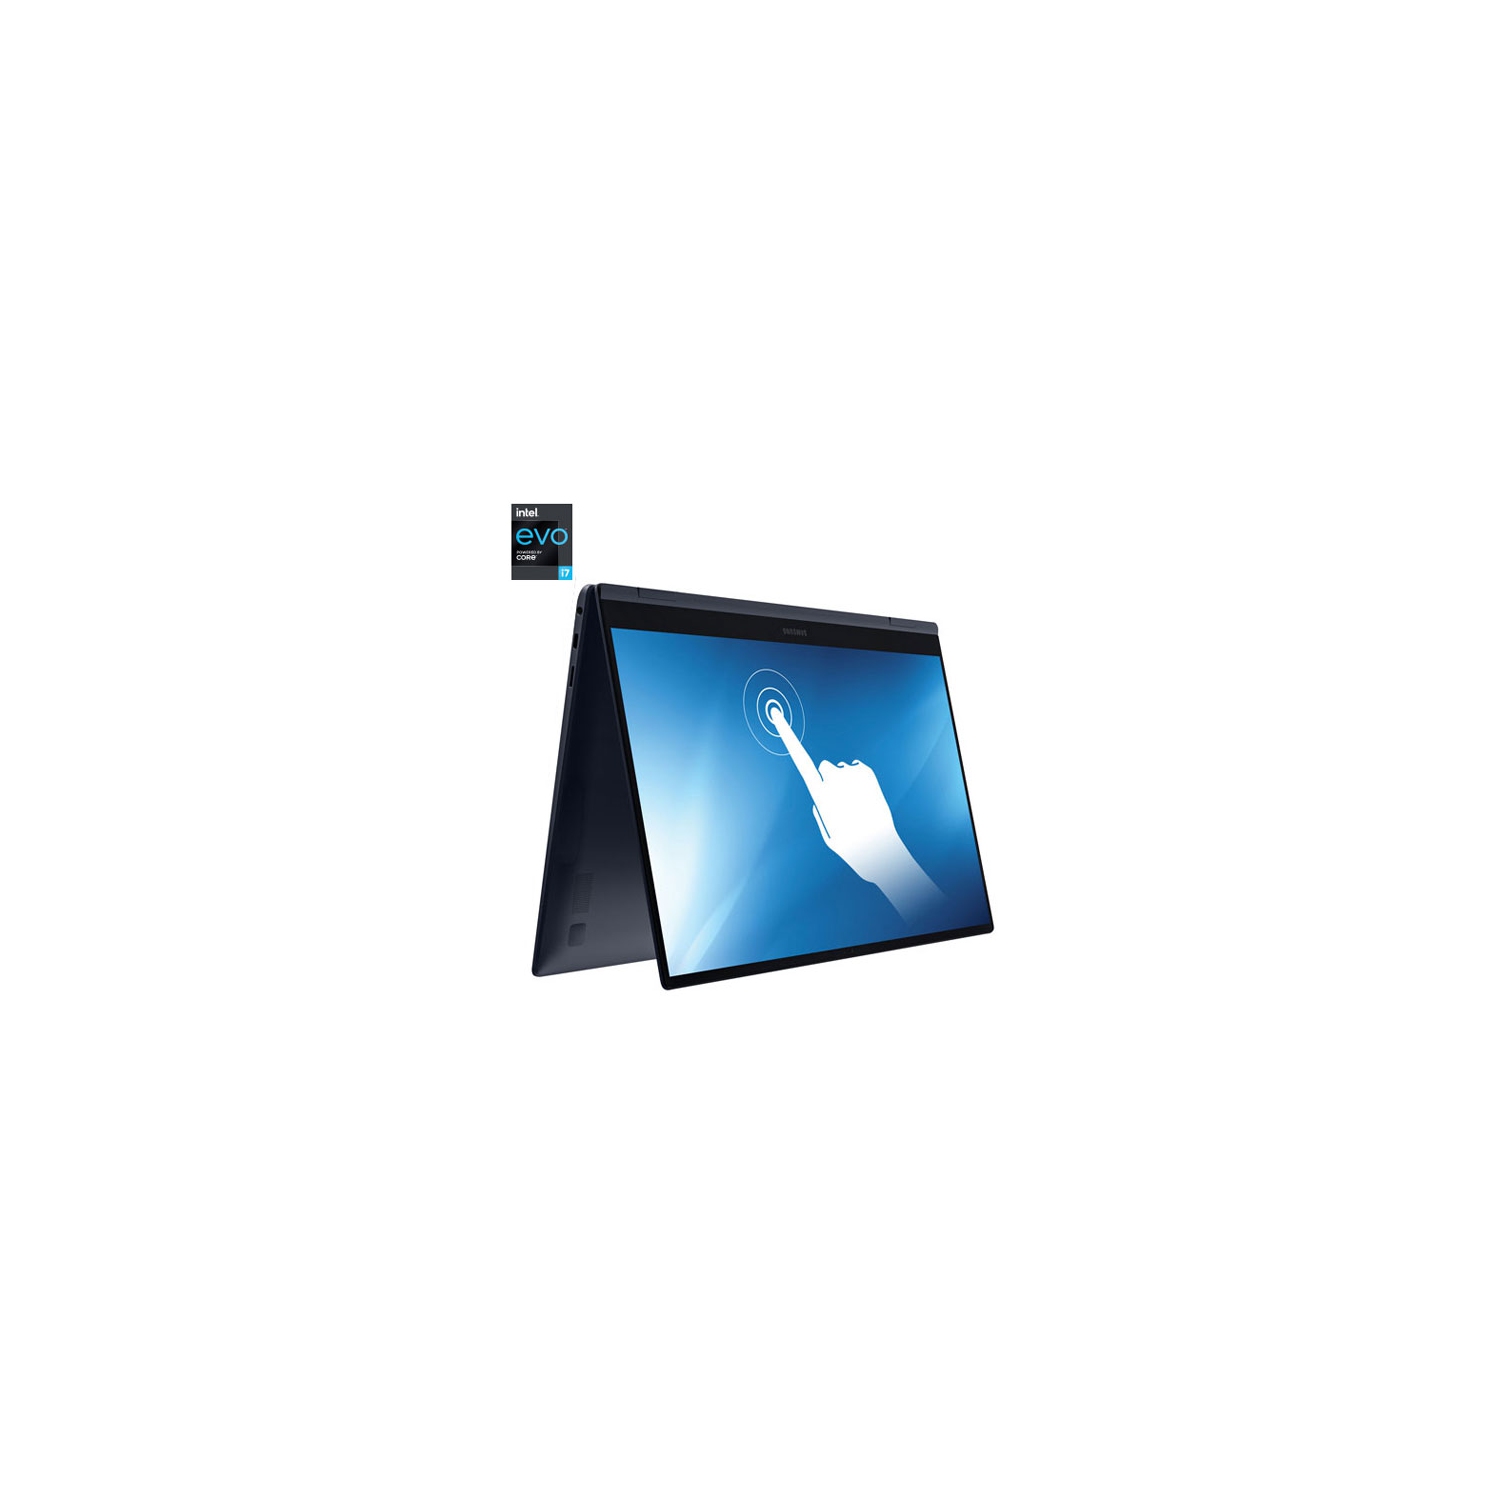 Refurbished (Excellent) - Samsung Galaxy Book Pro 360 15.6" Touchscreen 2-in-1 Laptop (Intel Evo i7-1165G7/512GB SSD/16GB RAM)